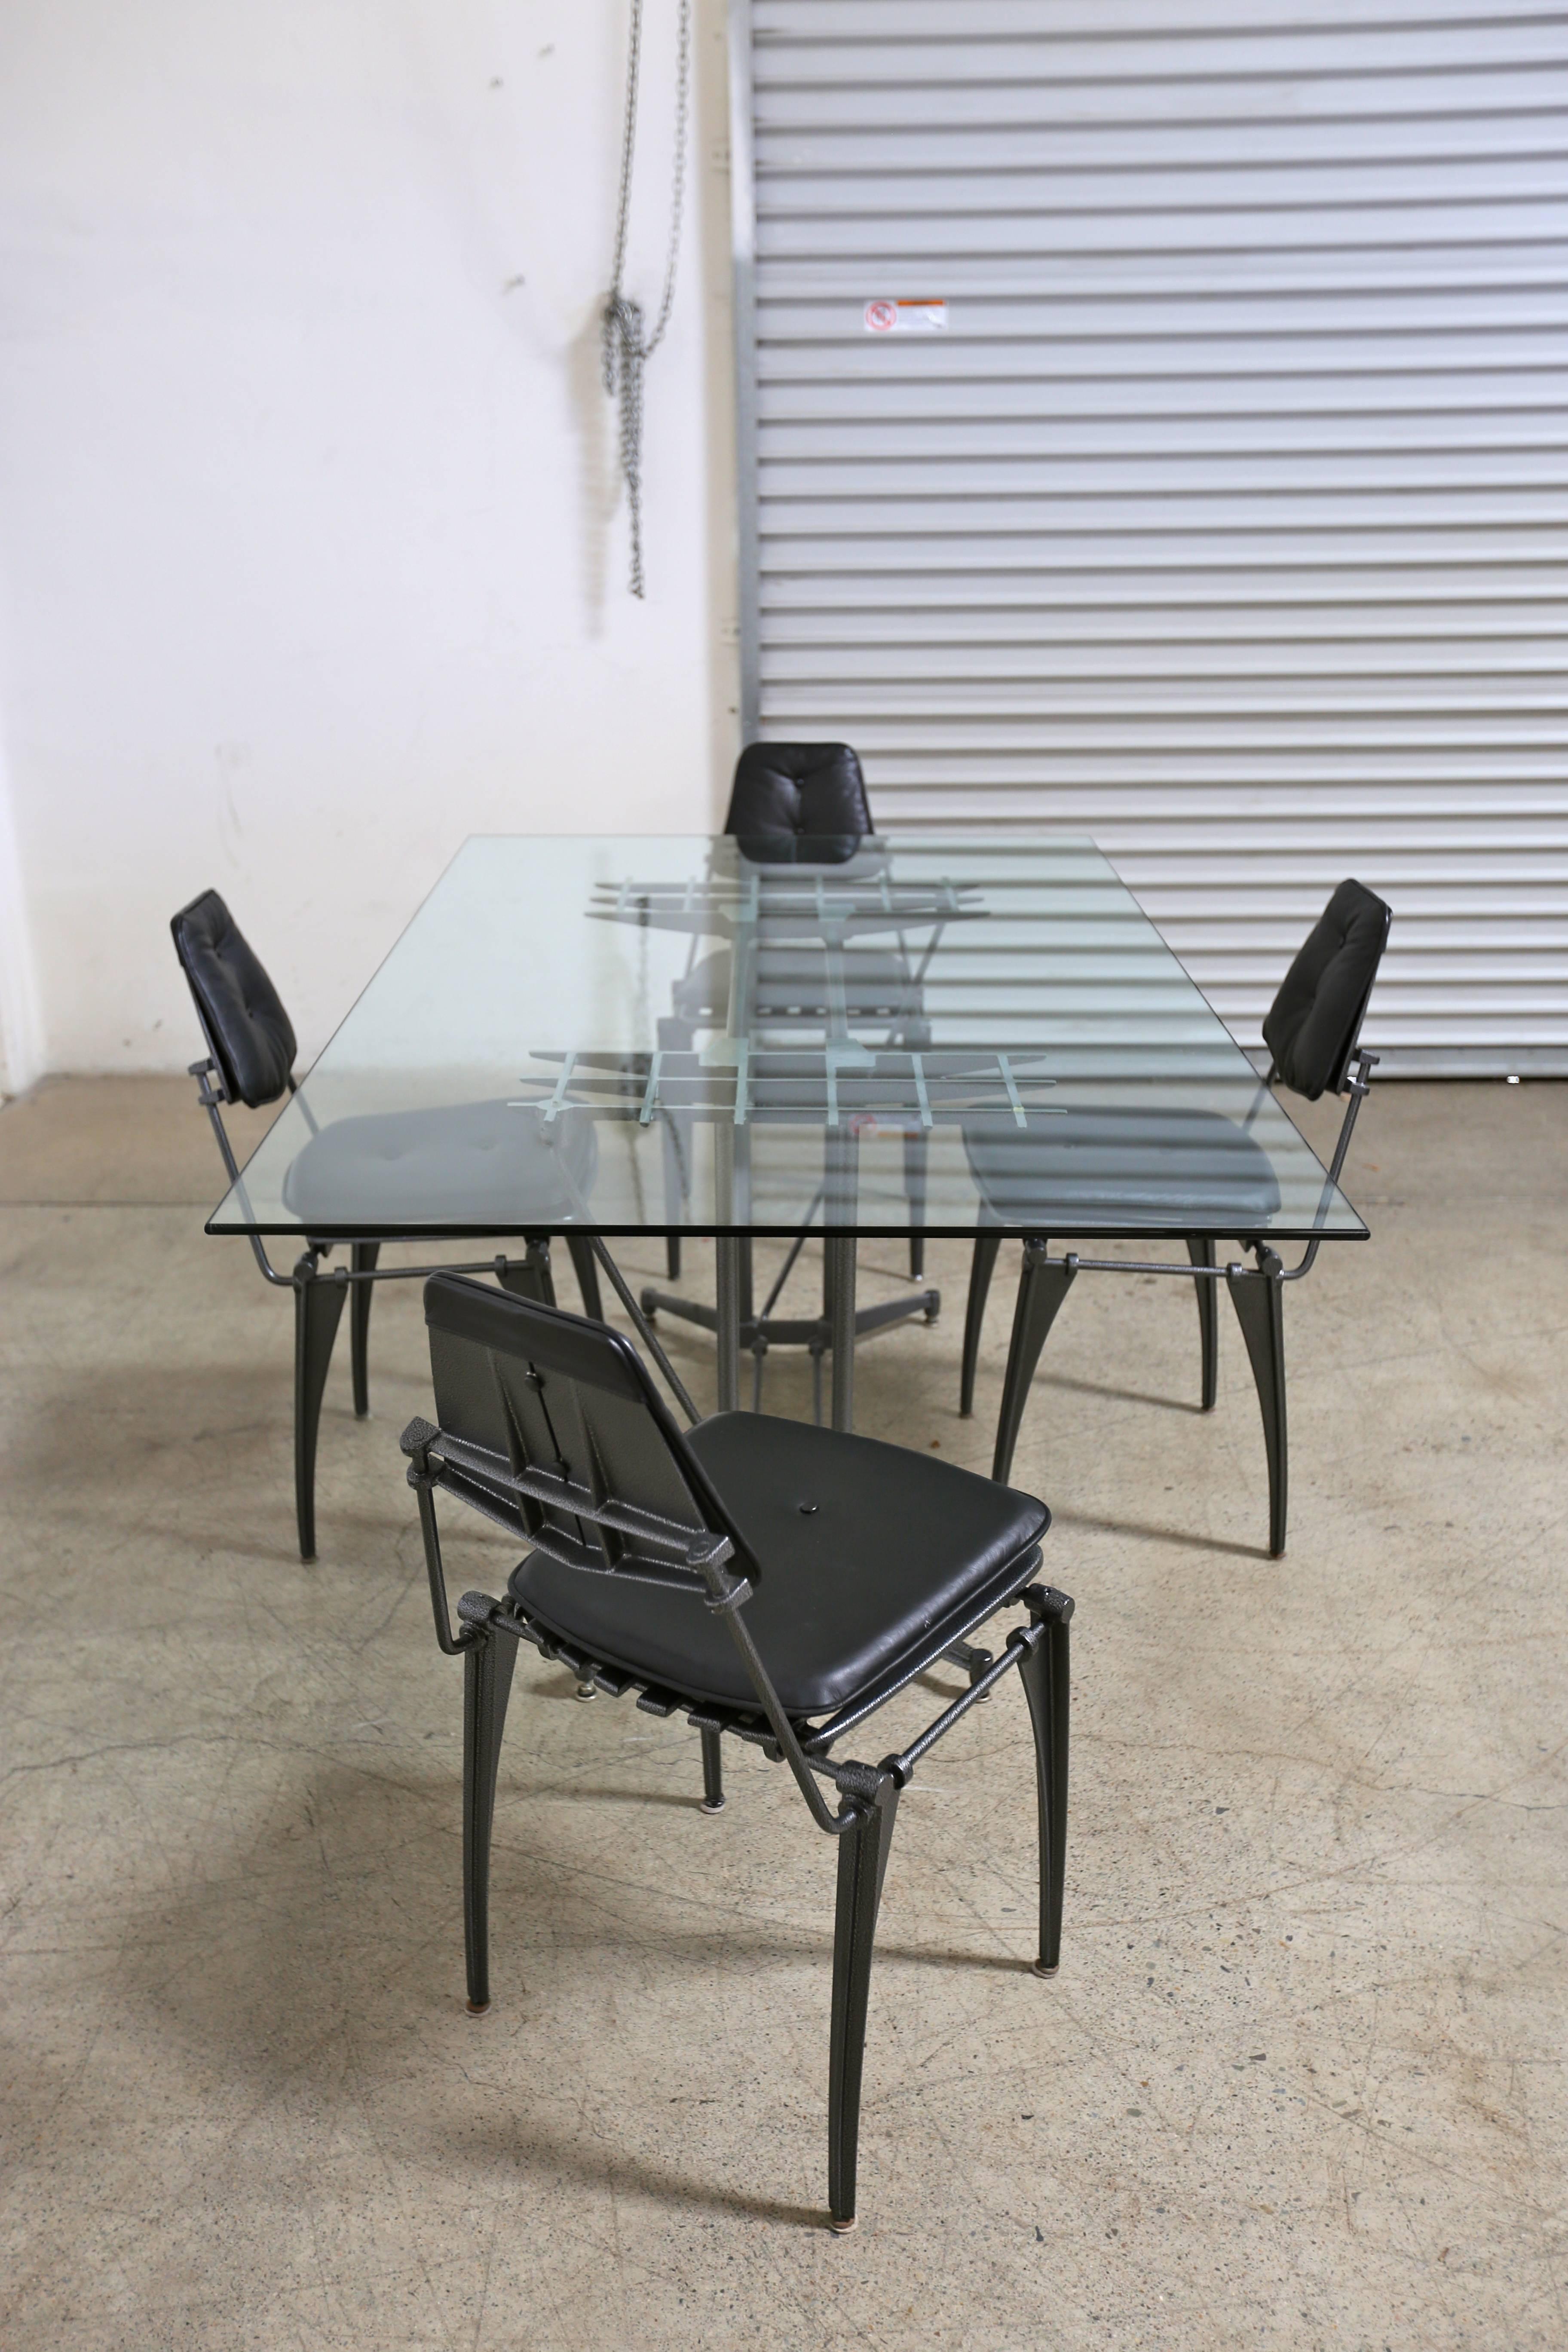 Modernist dining set by Robert Josten. 

The table measures: 71.5" wide x 41.75" deep x 29" tall.

Each chair measures: 18.5" wide x 20" deep x 34" tall 20" to the top of the seat.